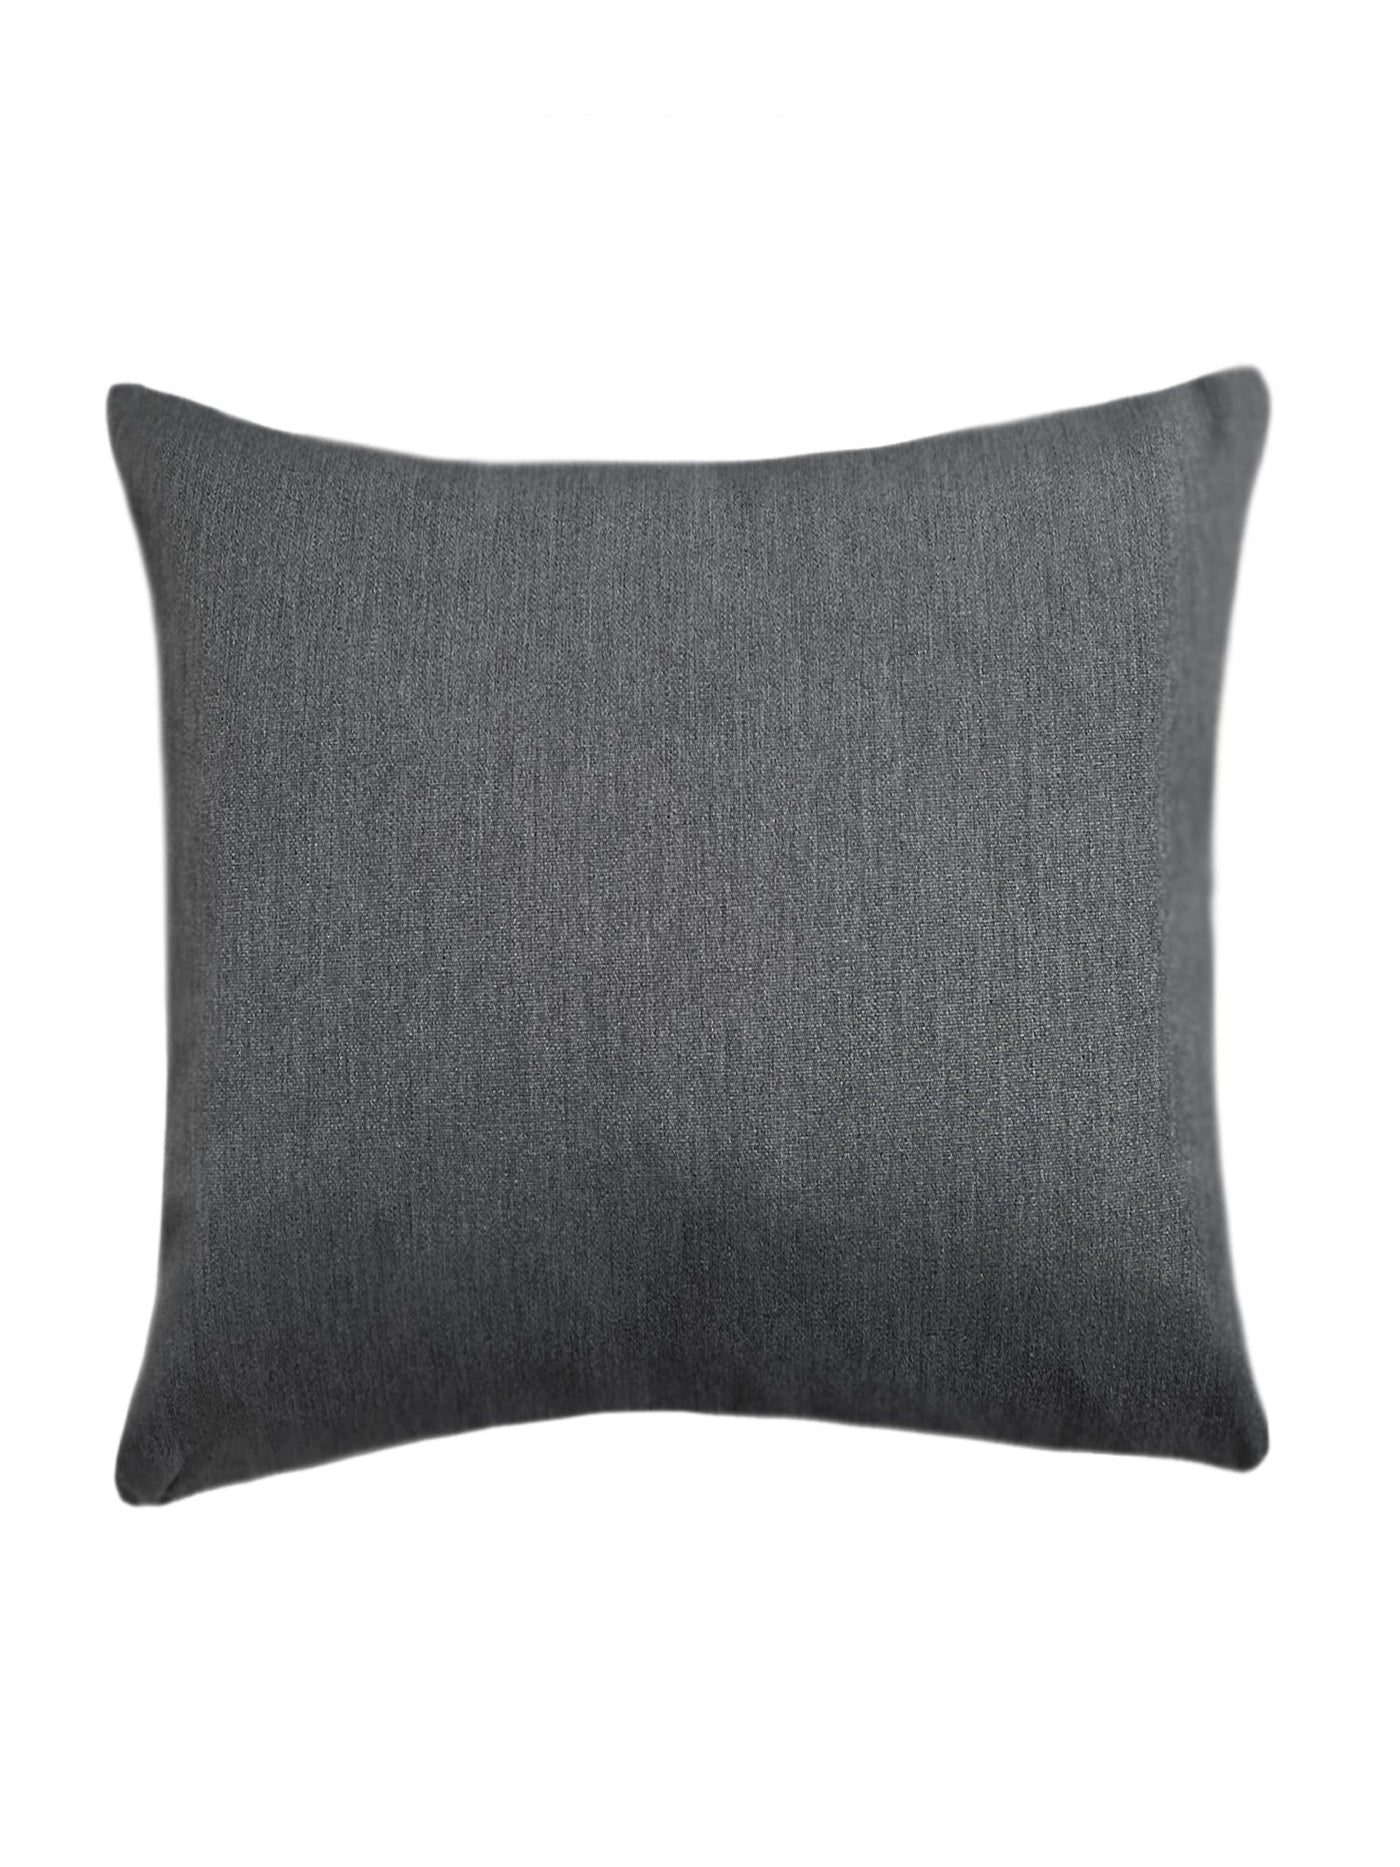 Luxe Essential Dark Grey Outdoor Pillow by Anaya